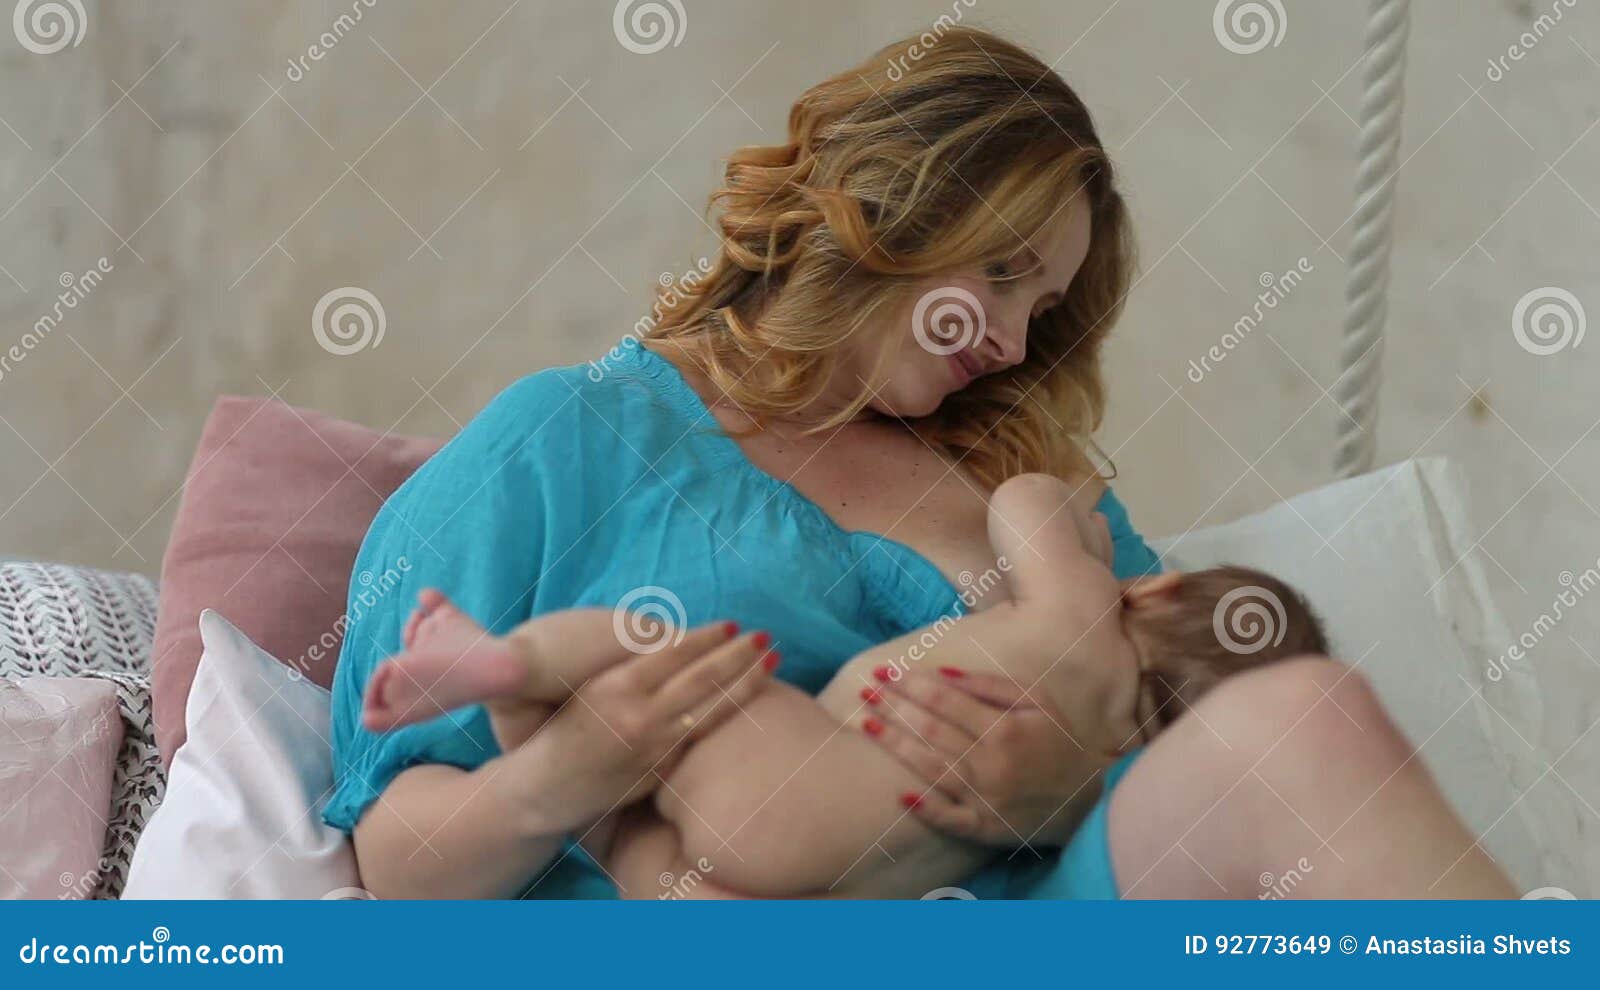 Nude girl breastfeeding nude girl